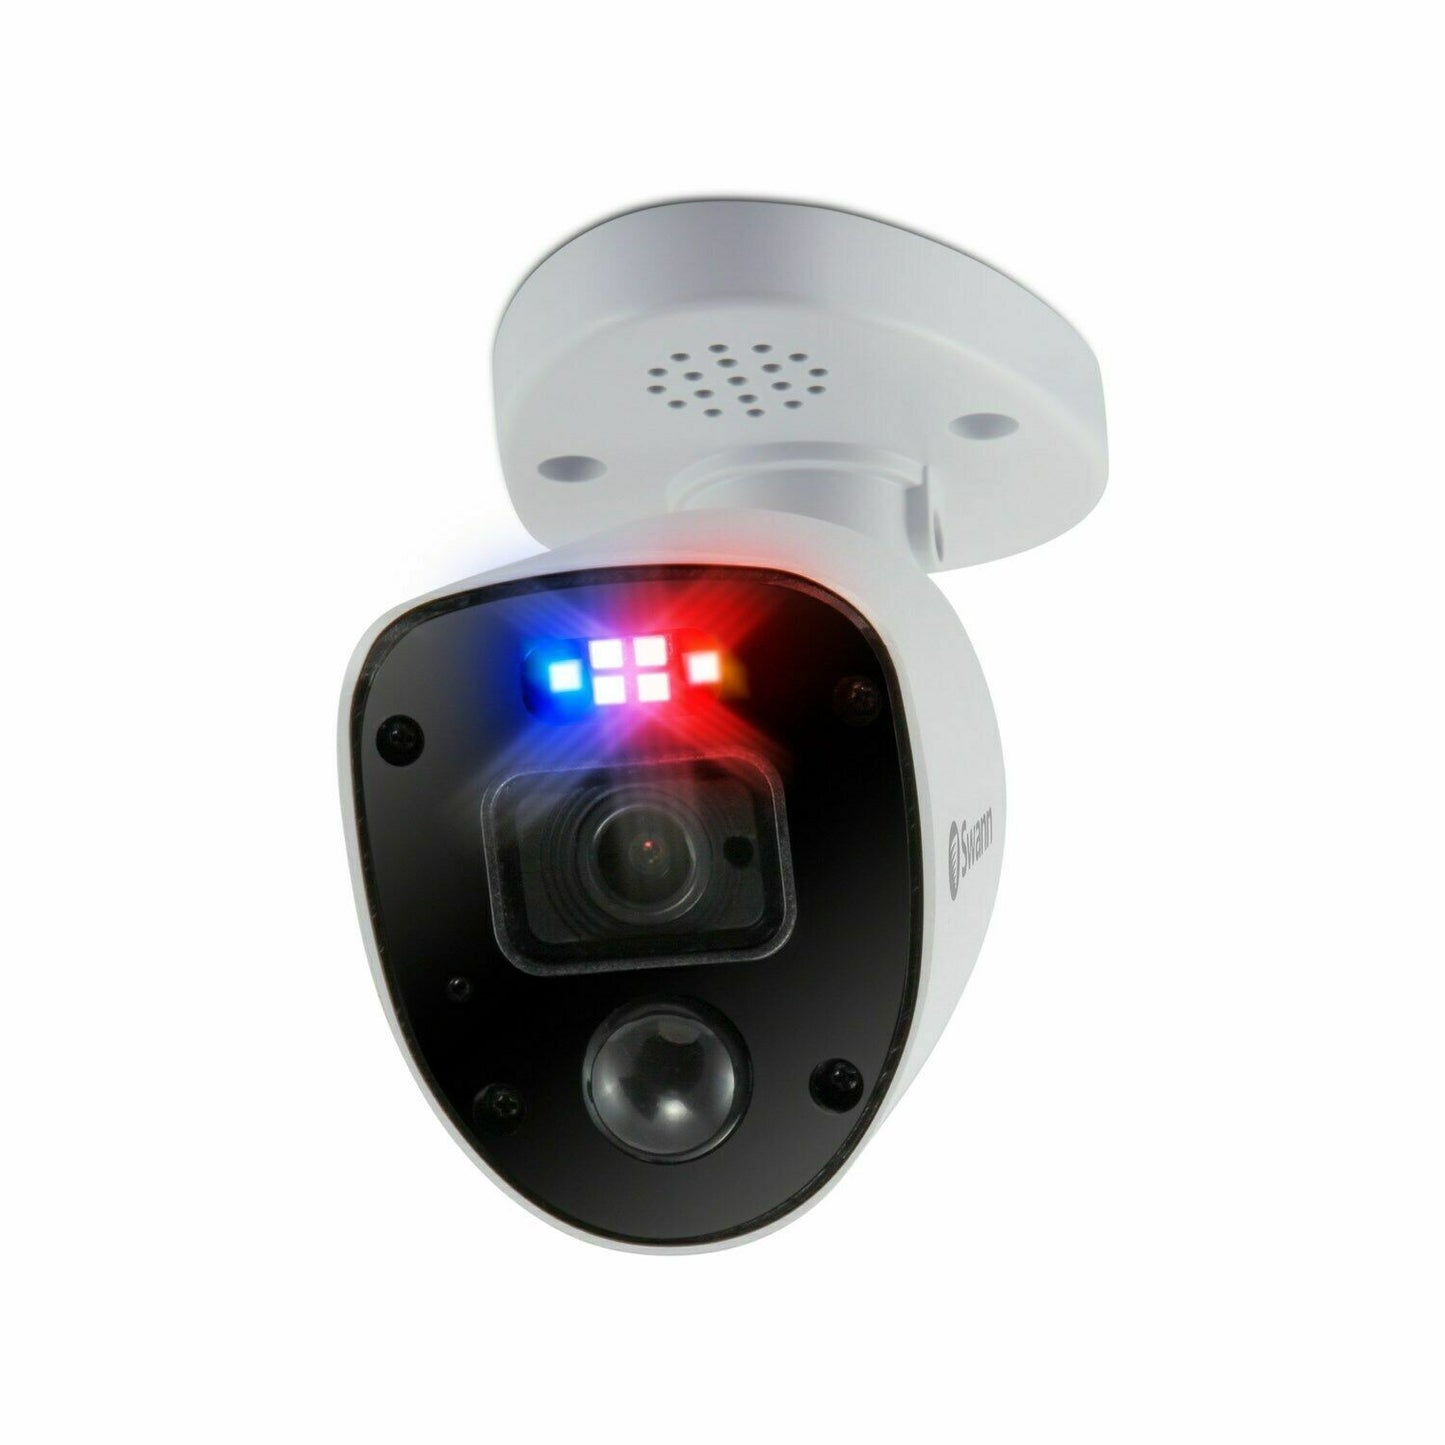 Swann CCTV Camera PRO-4KRL 4K UHD Enforcer Police Style Flashing Lights Sirens